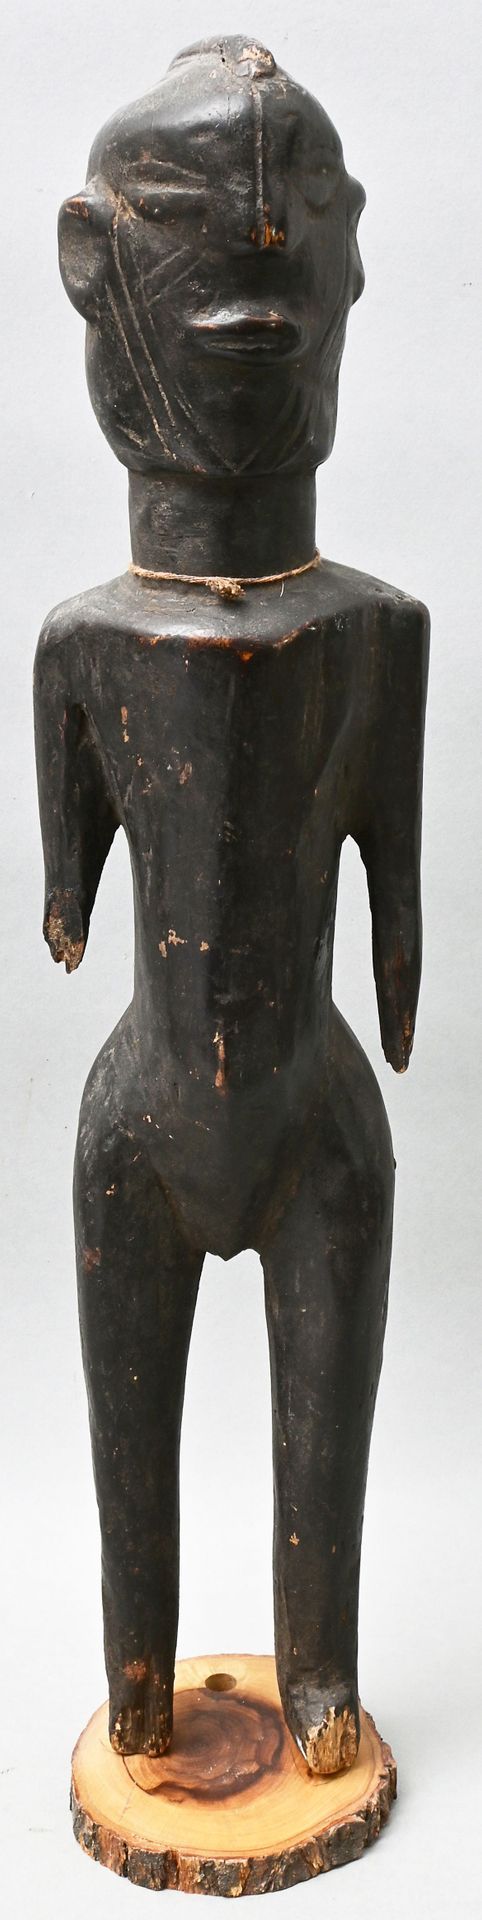 Null Figure, West Africa, rather: Mumuye/ Nigeria Male figure, wood, carved, bla&hellip;